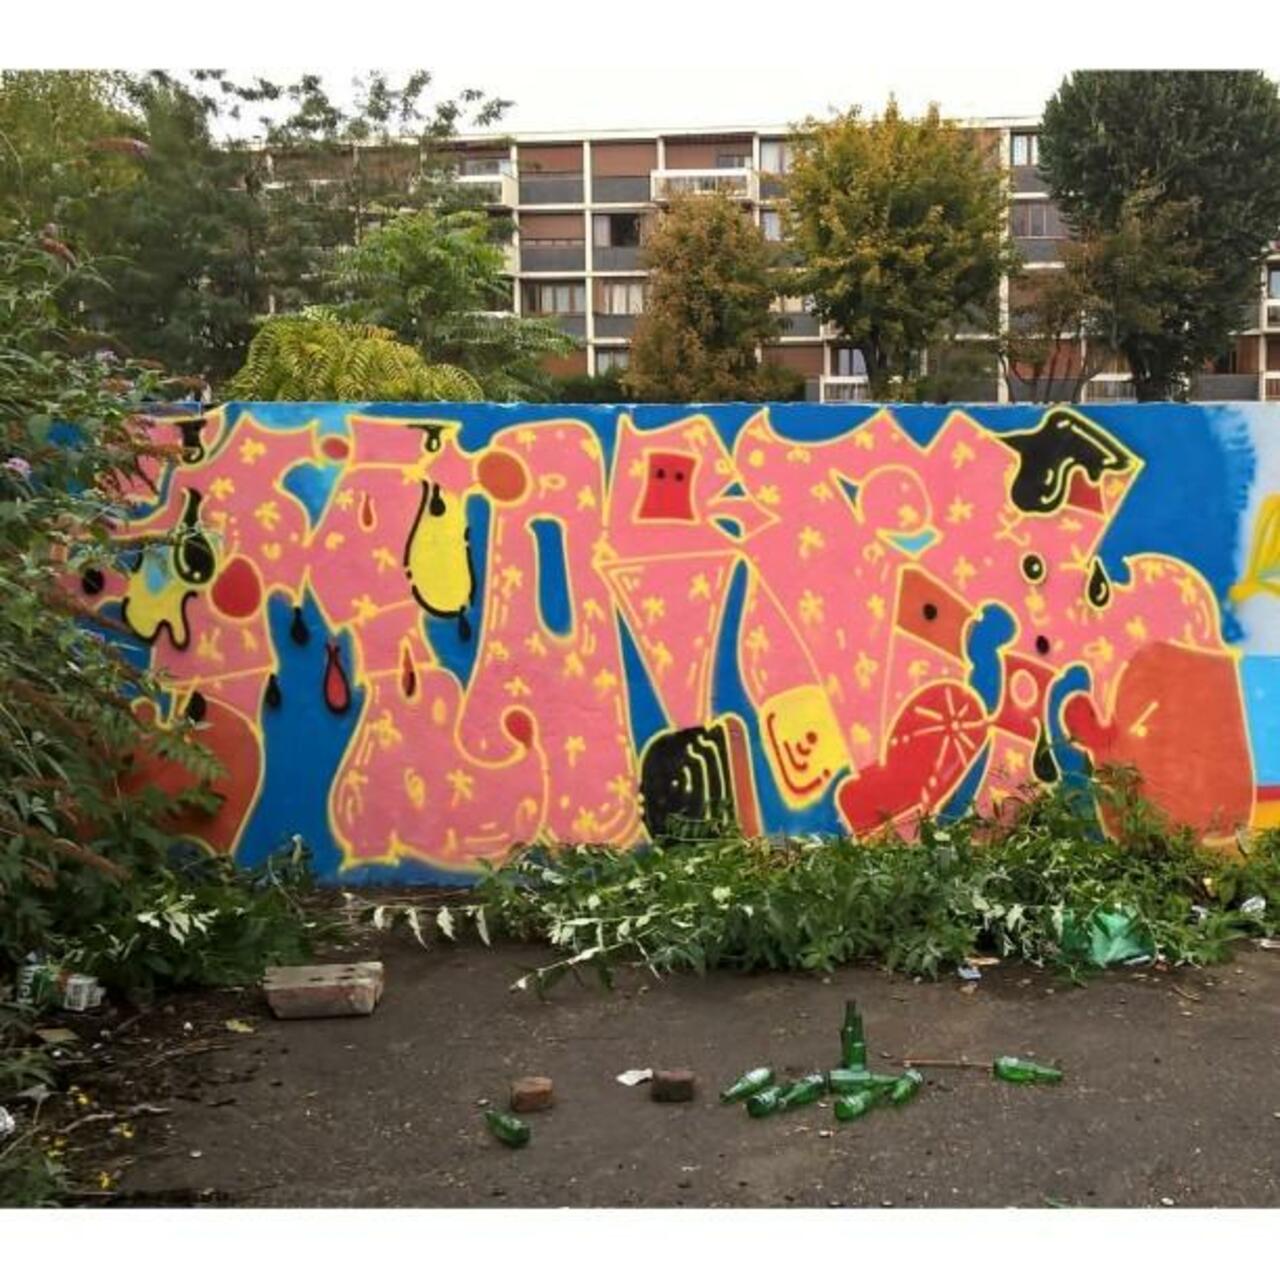 HORFE
#PALcrew #PeaceAndLoveCrew #Heineken #streetart #graffiti #graff #art #fatcap #bombing #sprayart #spraycanart… https://t.co/jwVfPlrI4G